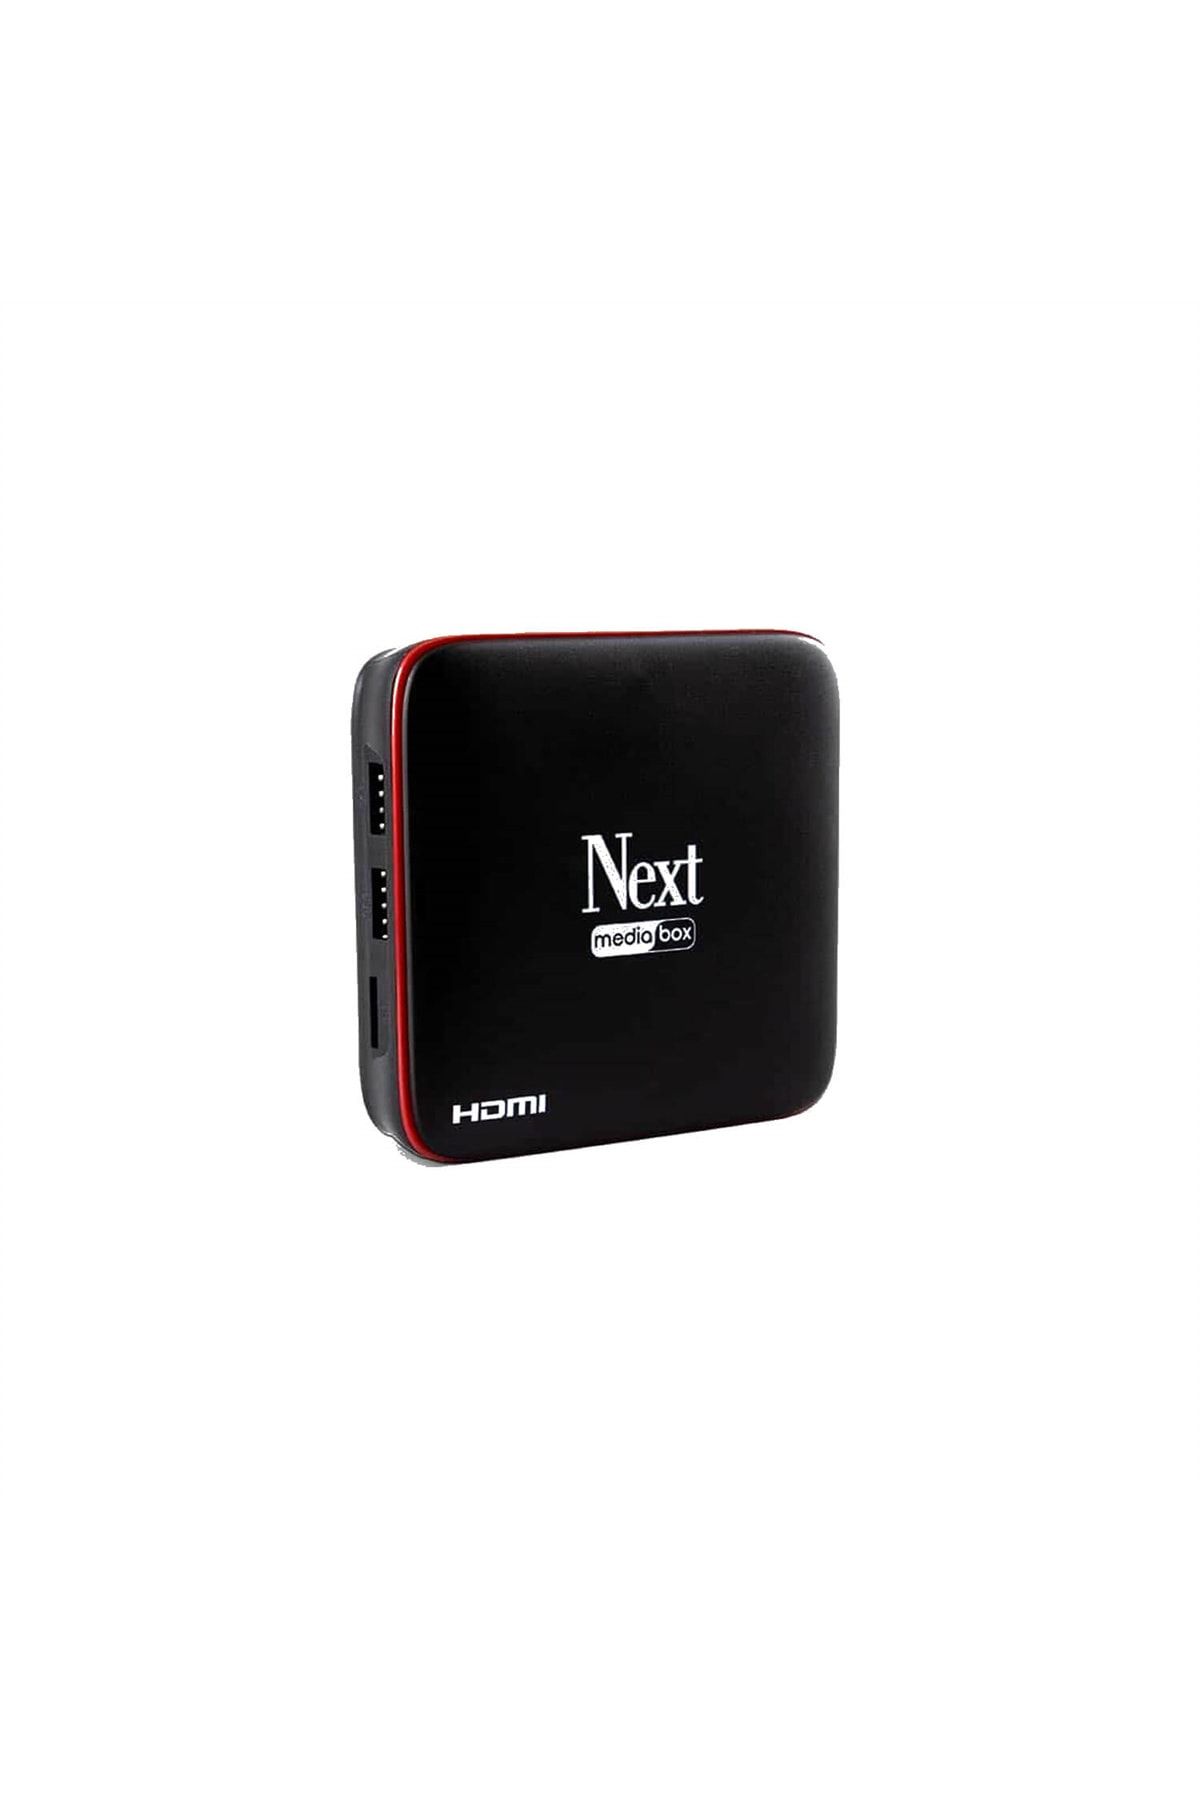 Next Nextstar Next Media Box 4k Android Tv Box